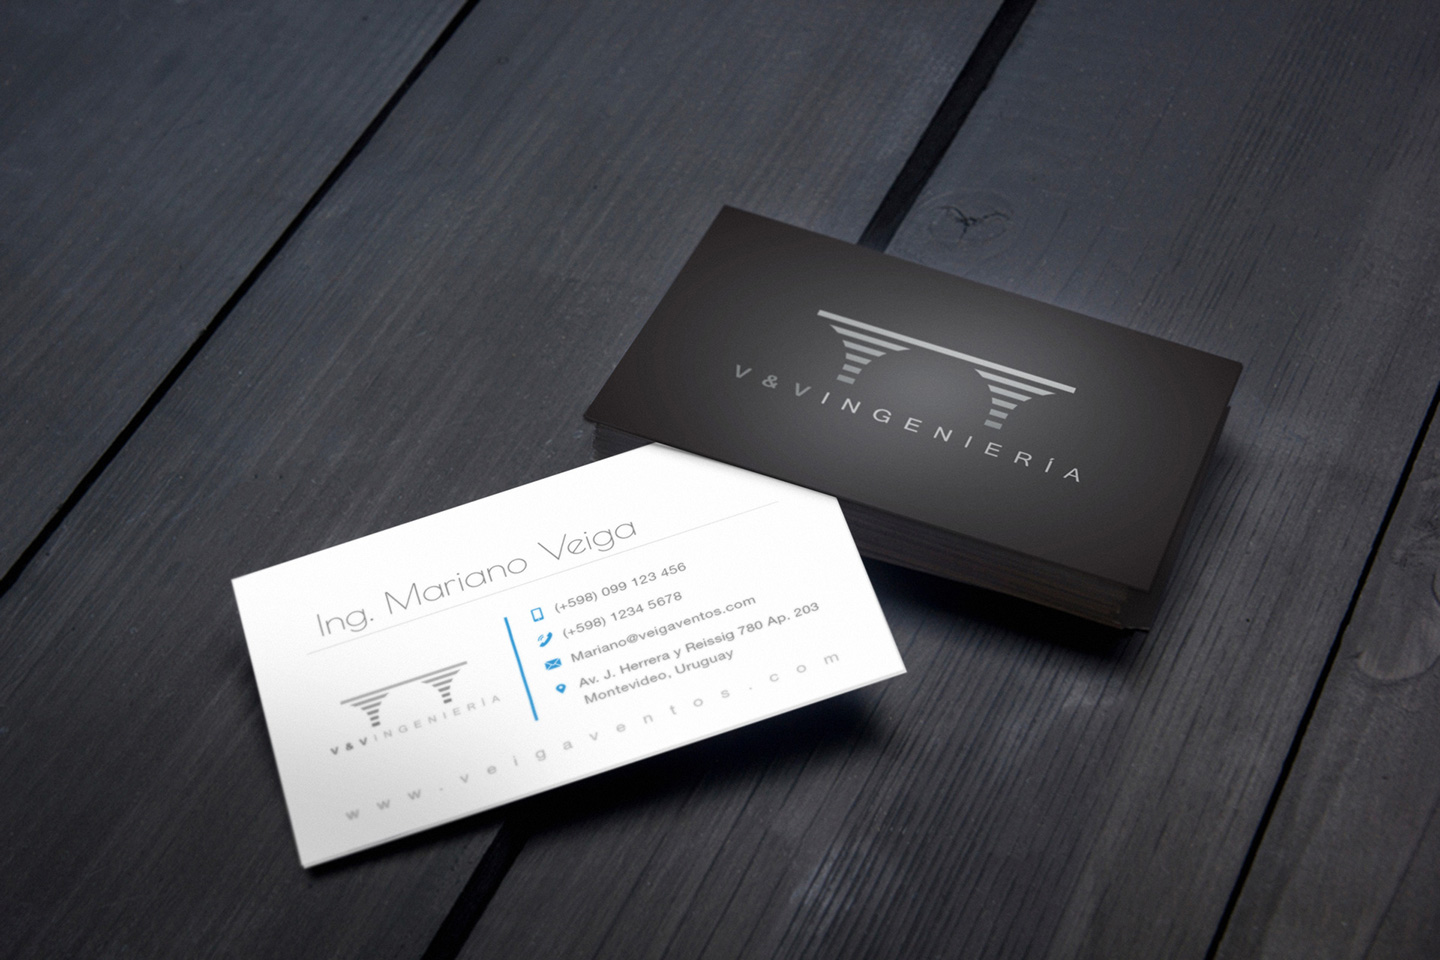 Veiga&Ventos business cards elegantly showcased